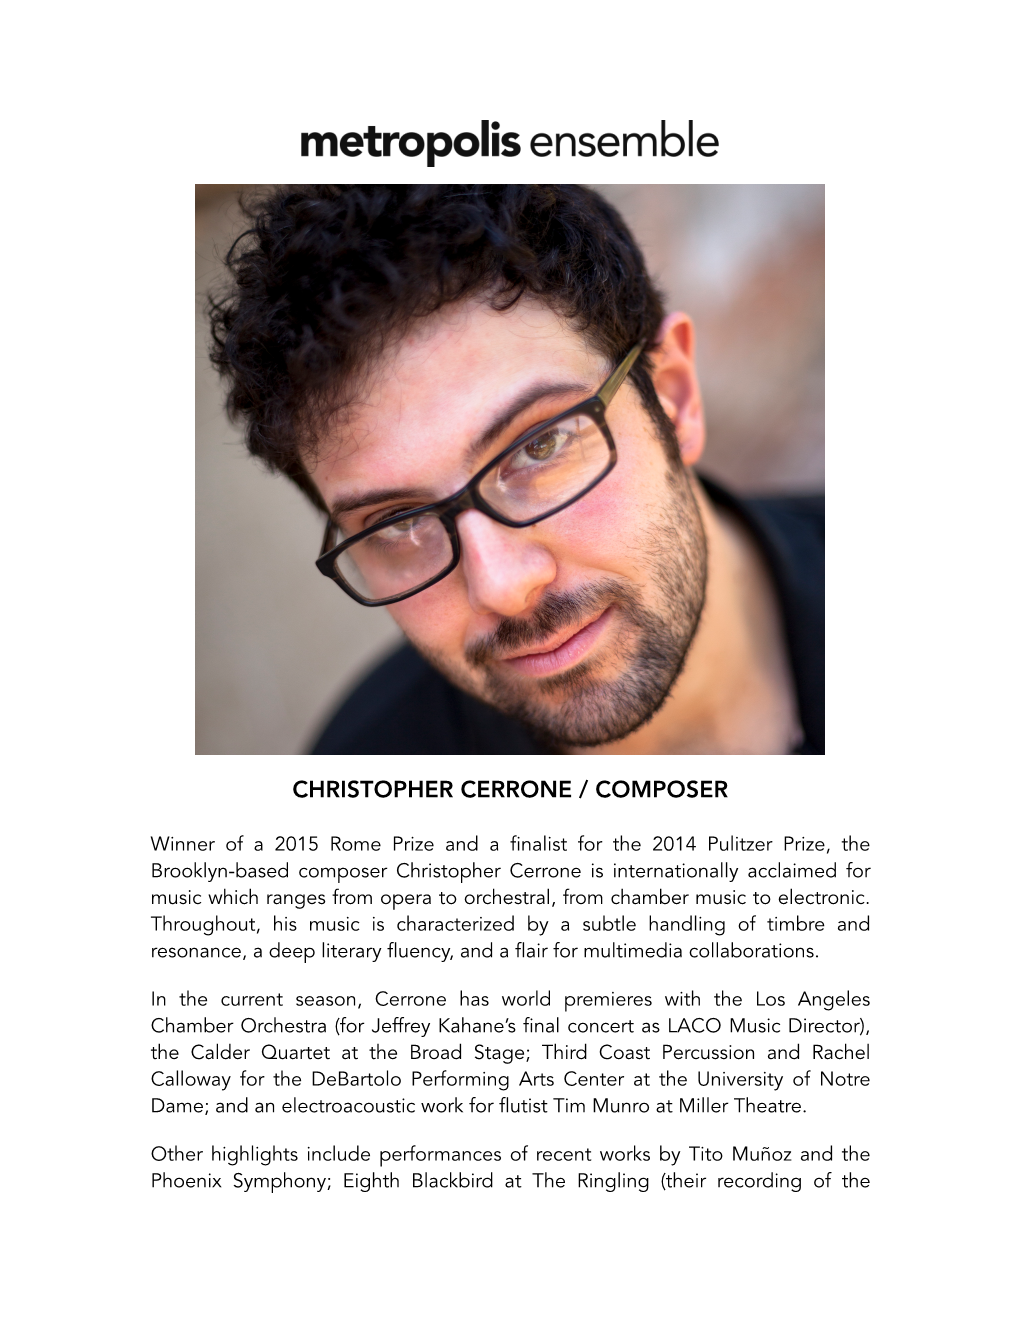 Christopher Cerrone / Composer